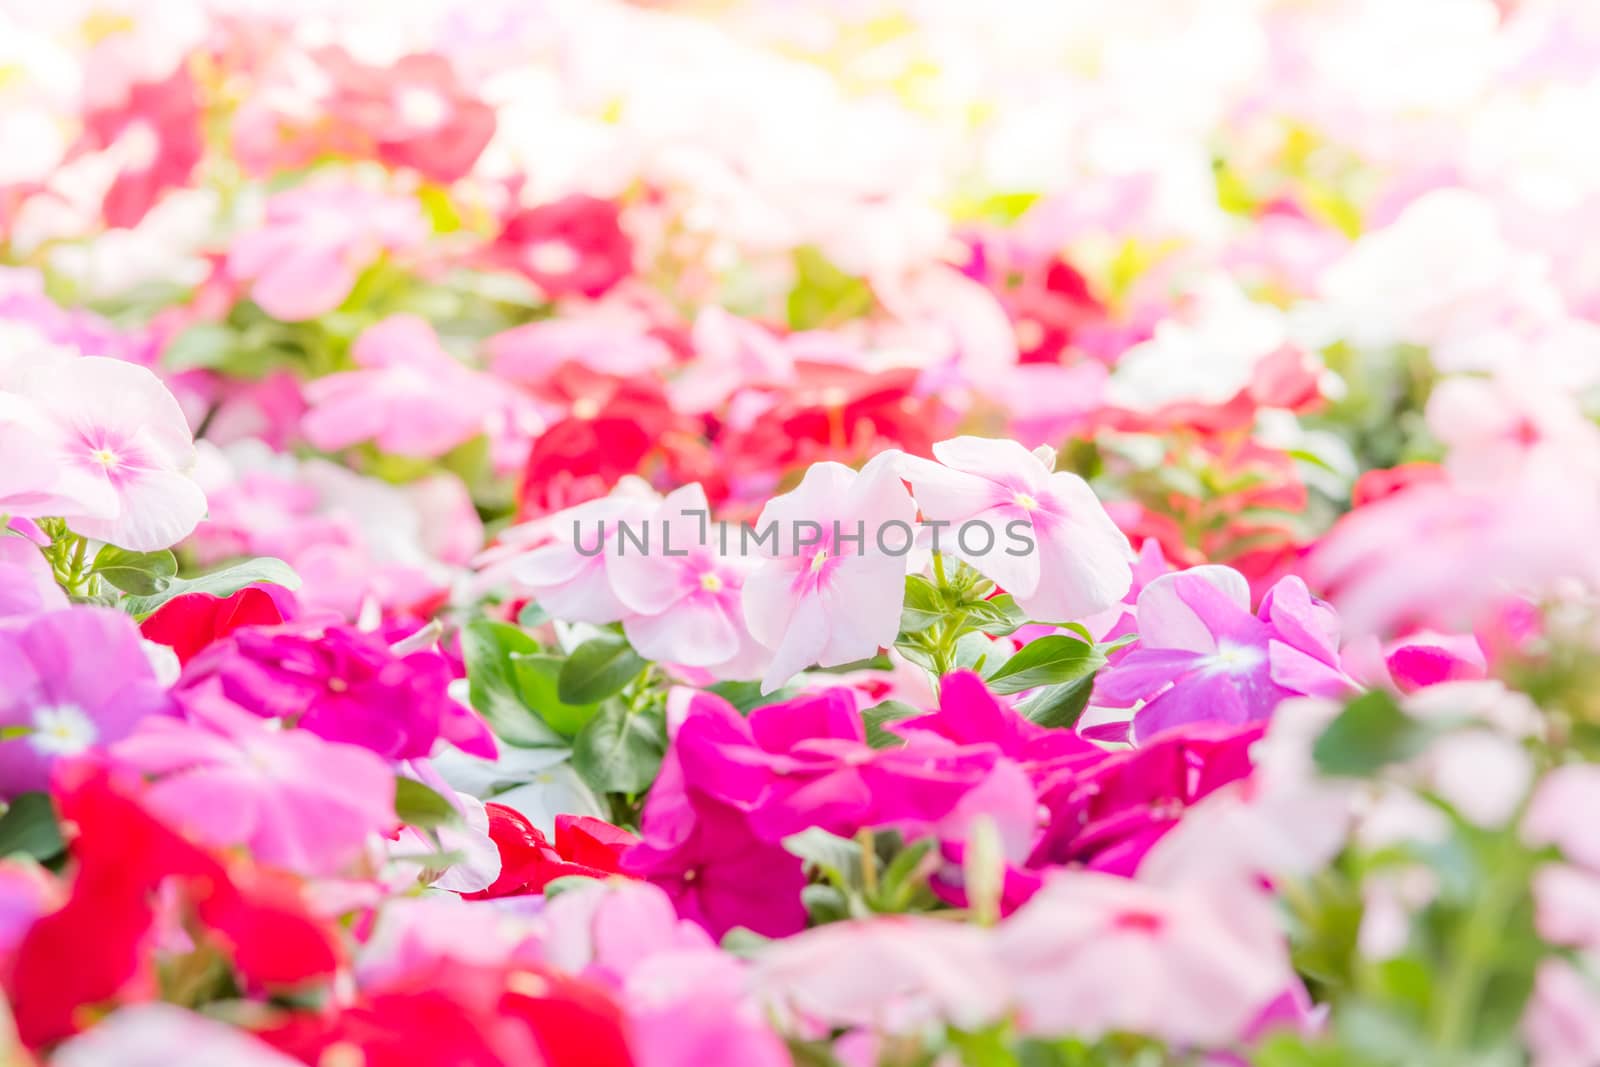 Vinca rosea flowers by yuiyuize